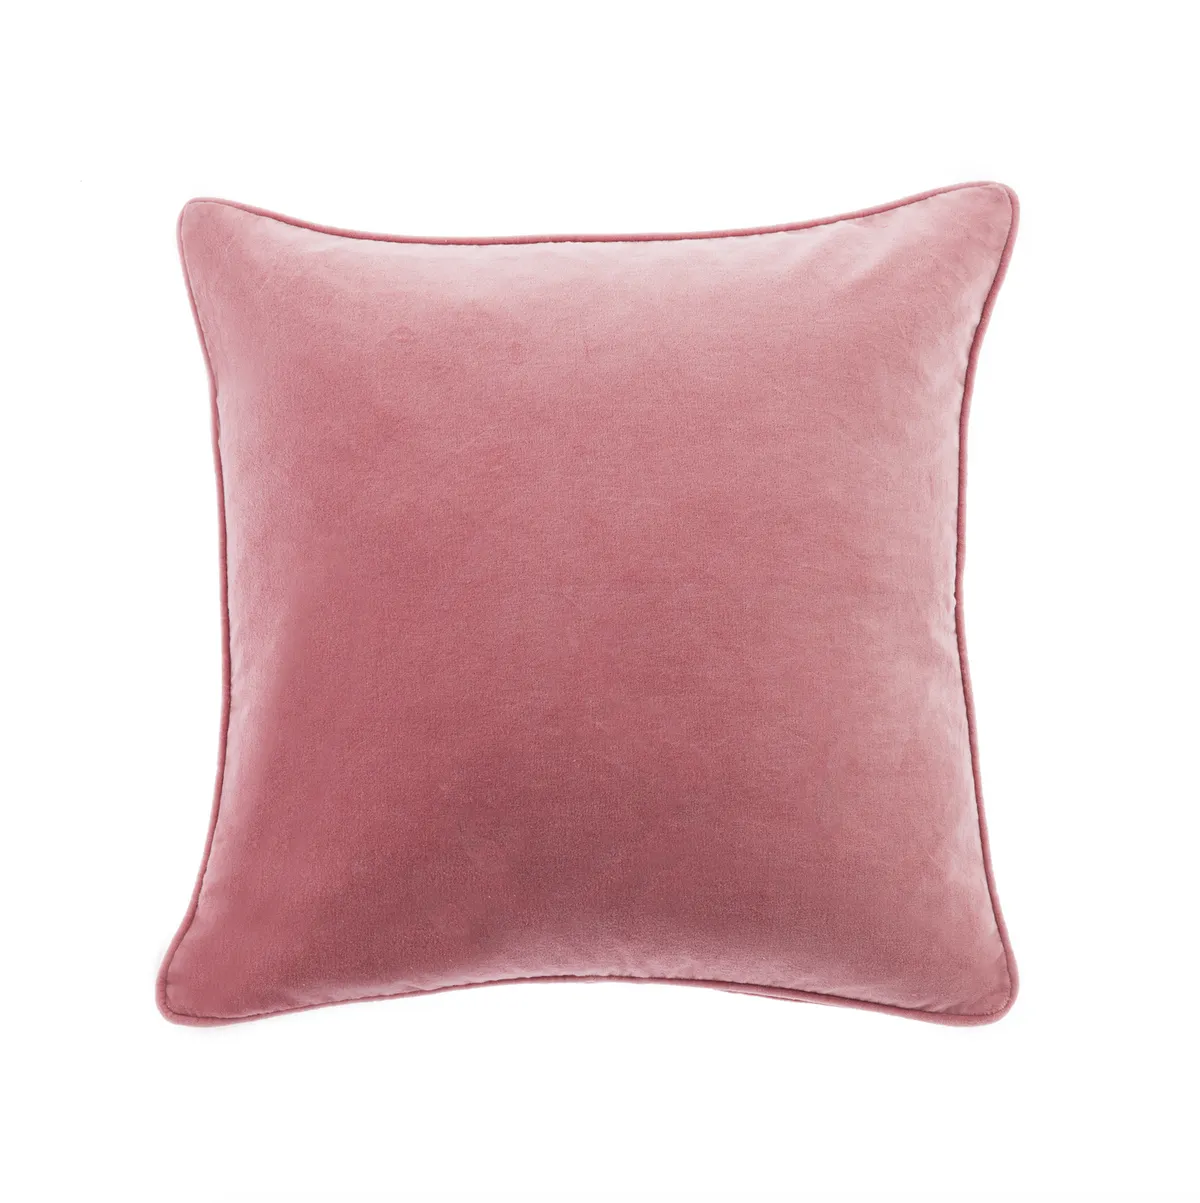 Clara Velvet Cushion in Dusky Pink, £20, Dunelm